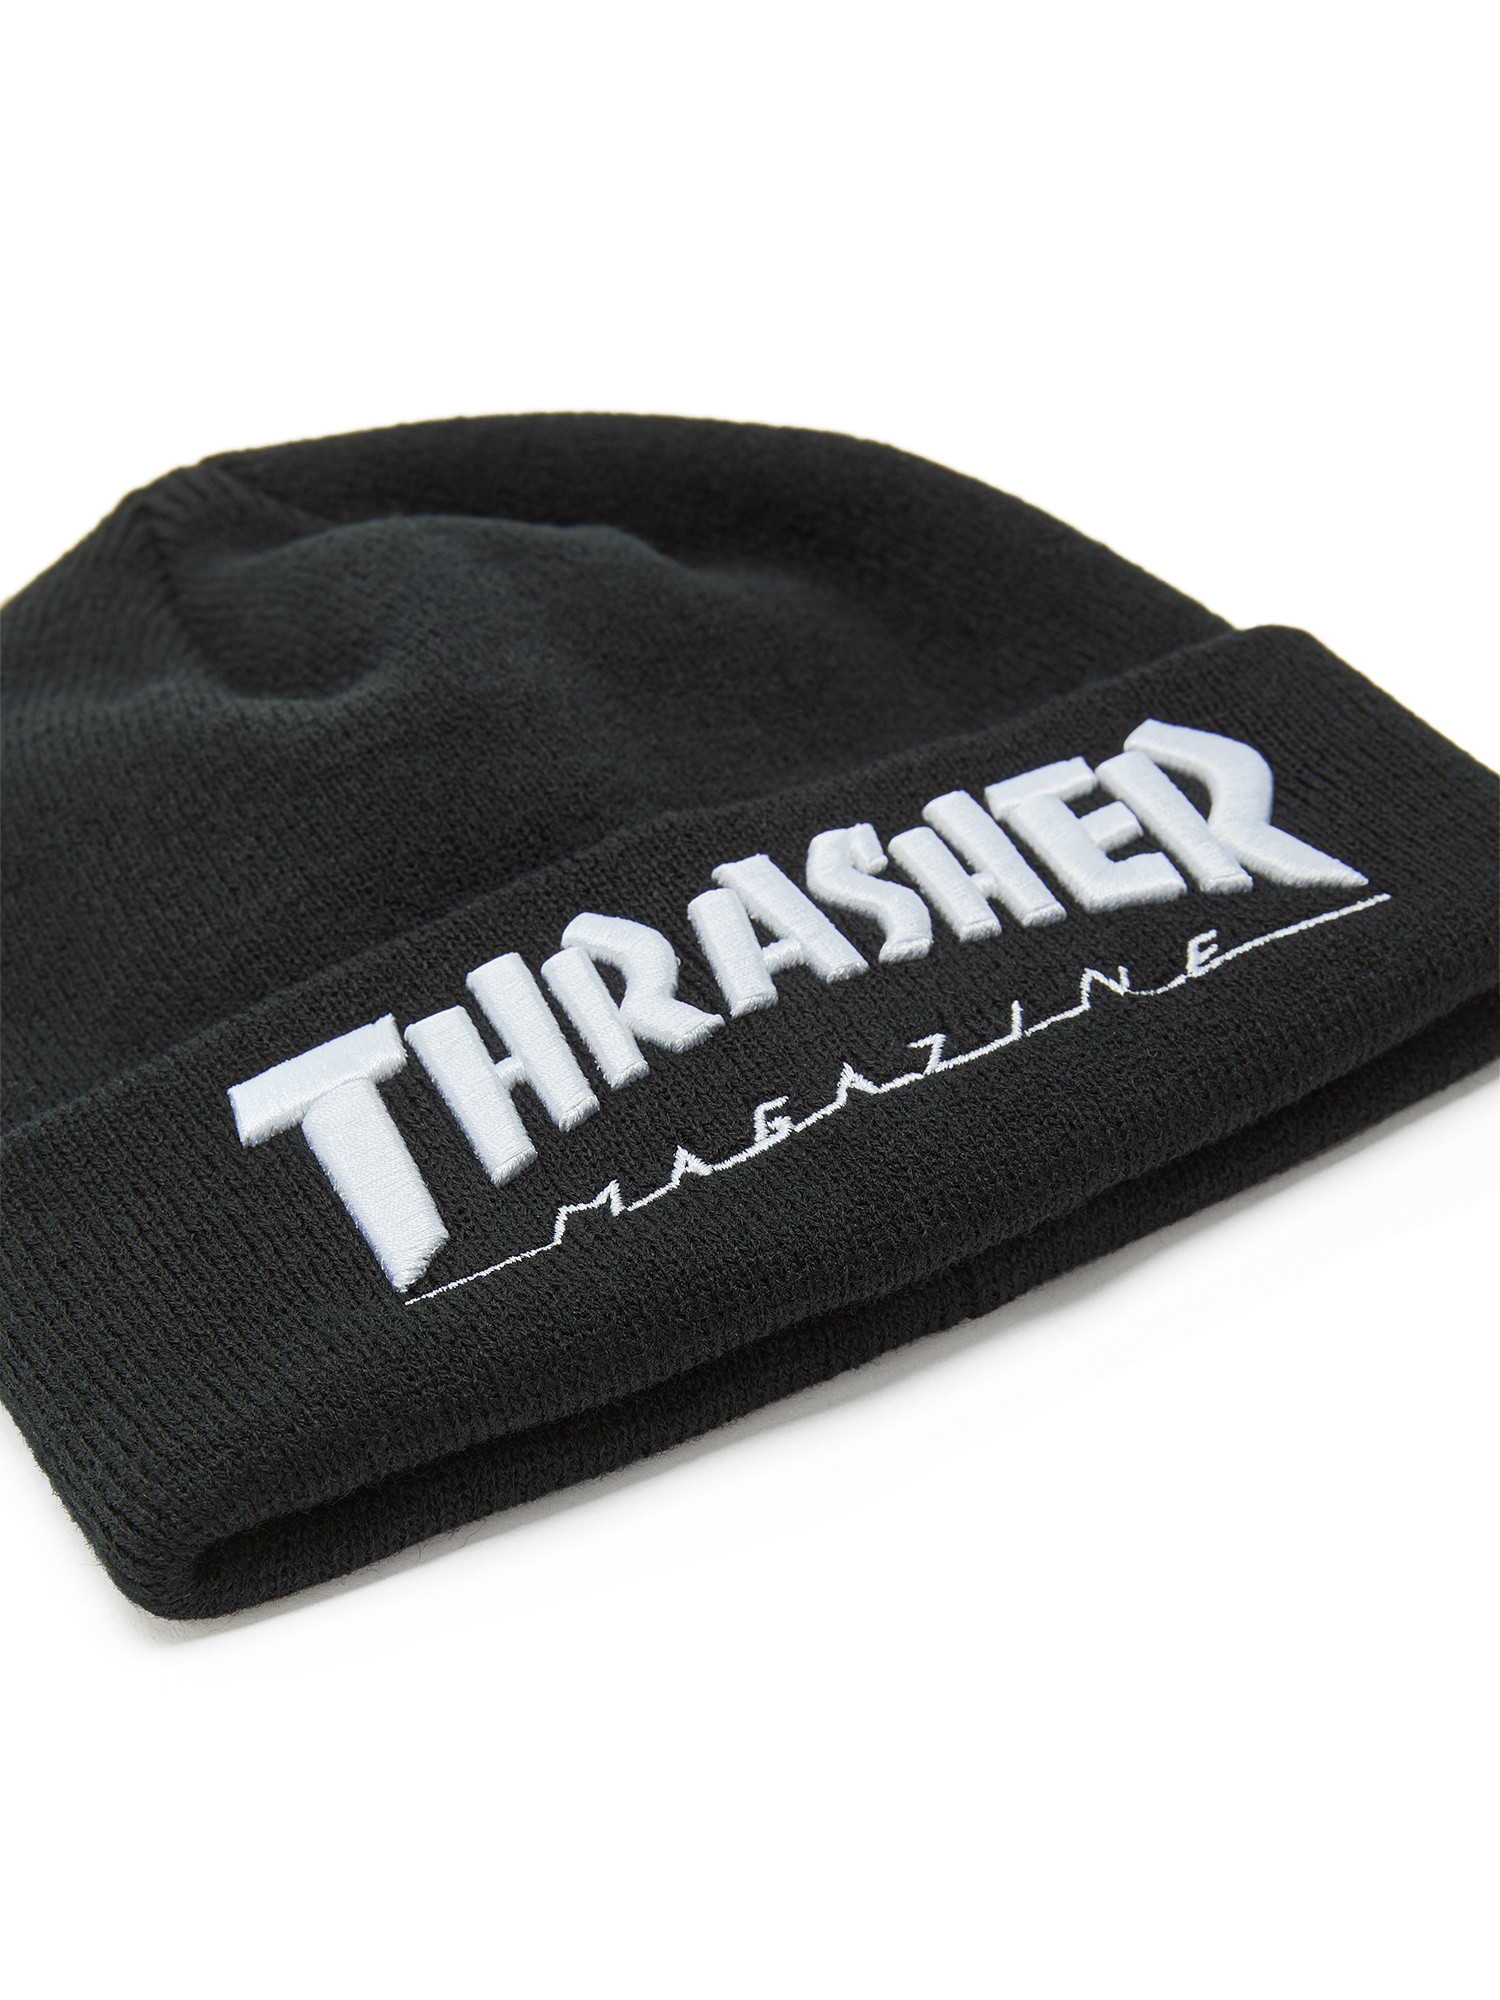 Thrasher - Embroidered Logo Beanie, White, large image number 1